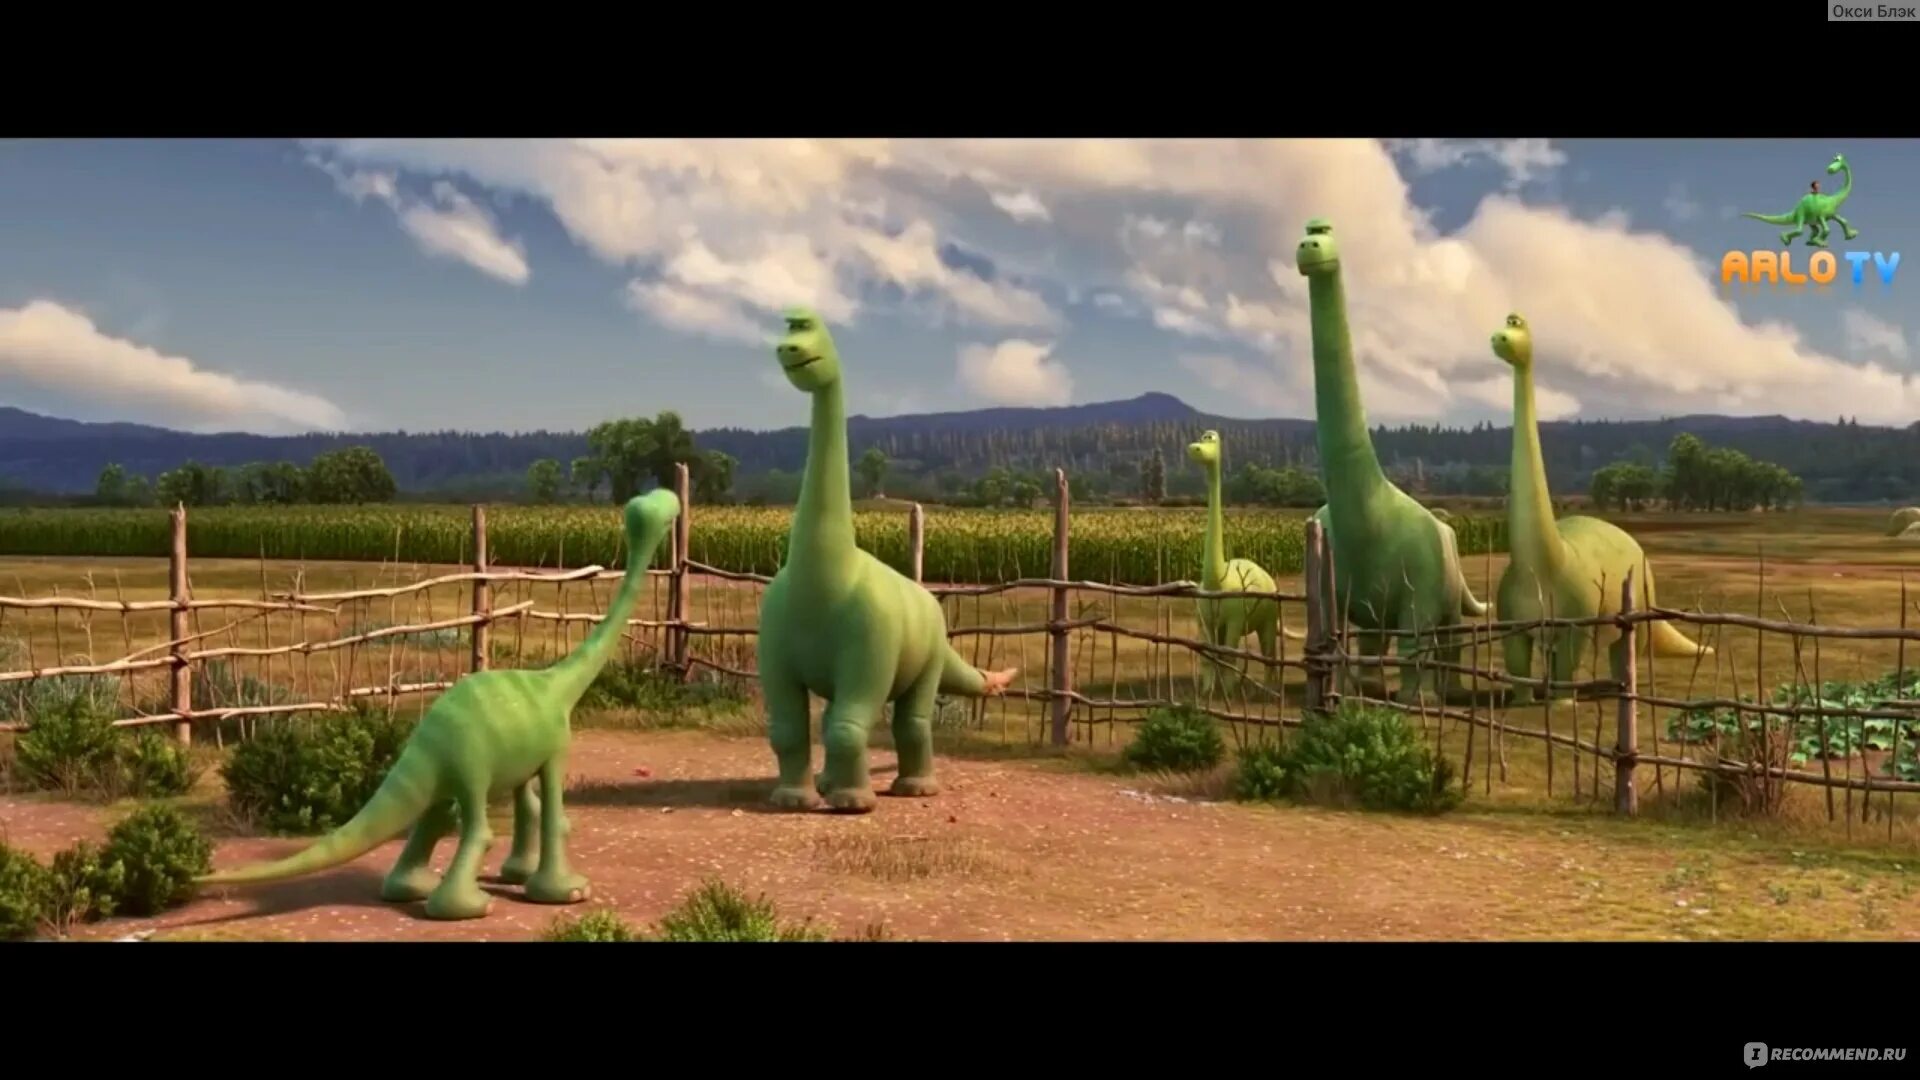 The good Dinosaur (хороший динозавр) (2015). Динозавр Арло. Динозаврами 2015